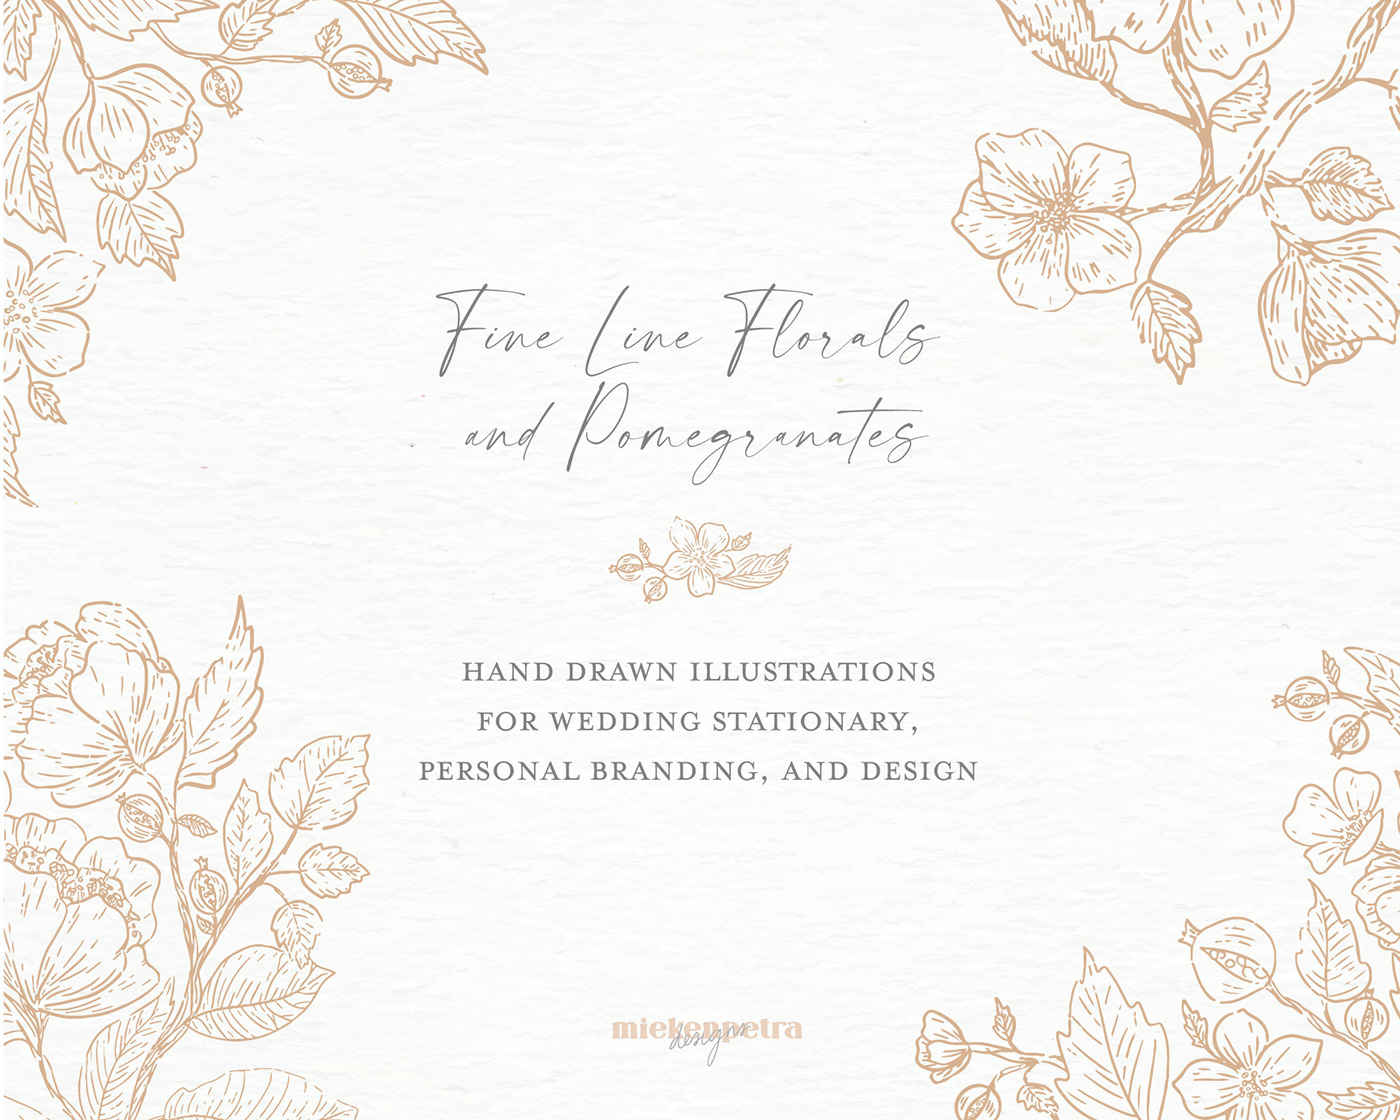 fine line illustrations hand drawn line art wedding stationary design Invitation sketches clip art delicate